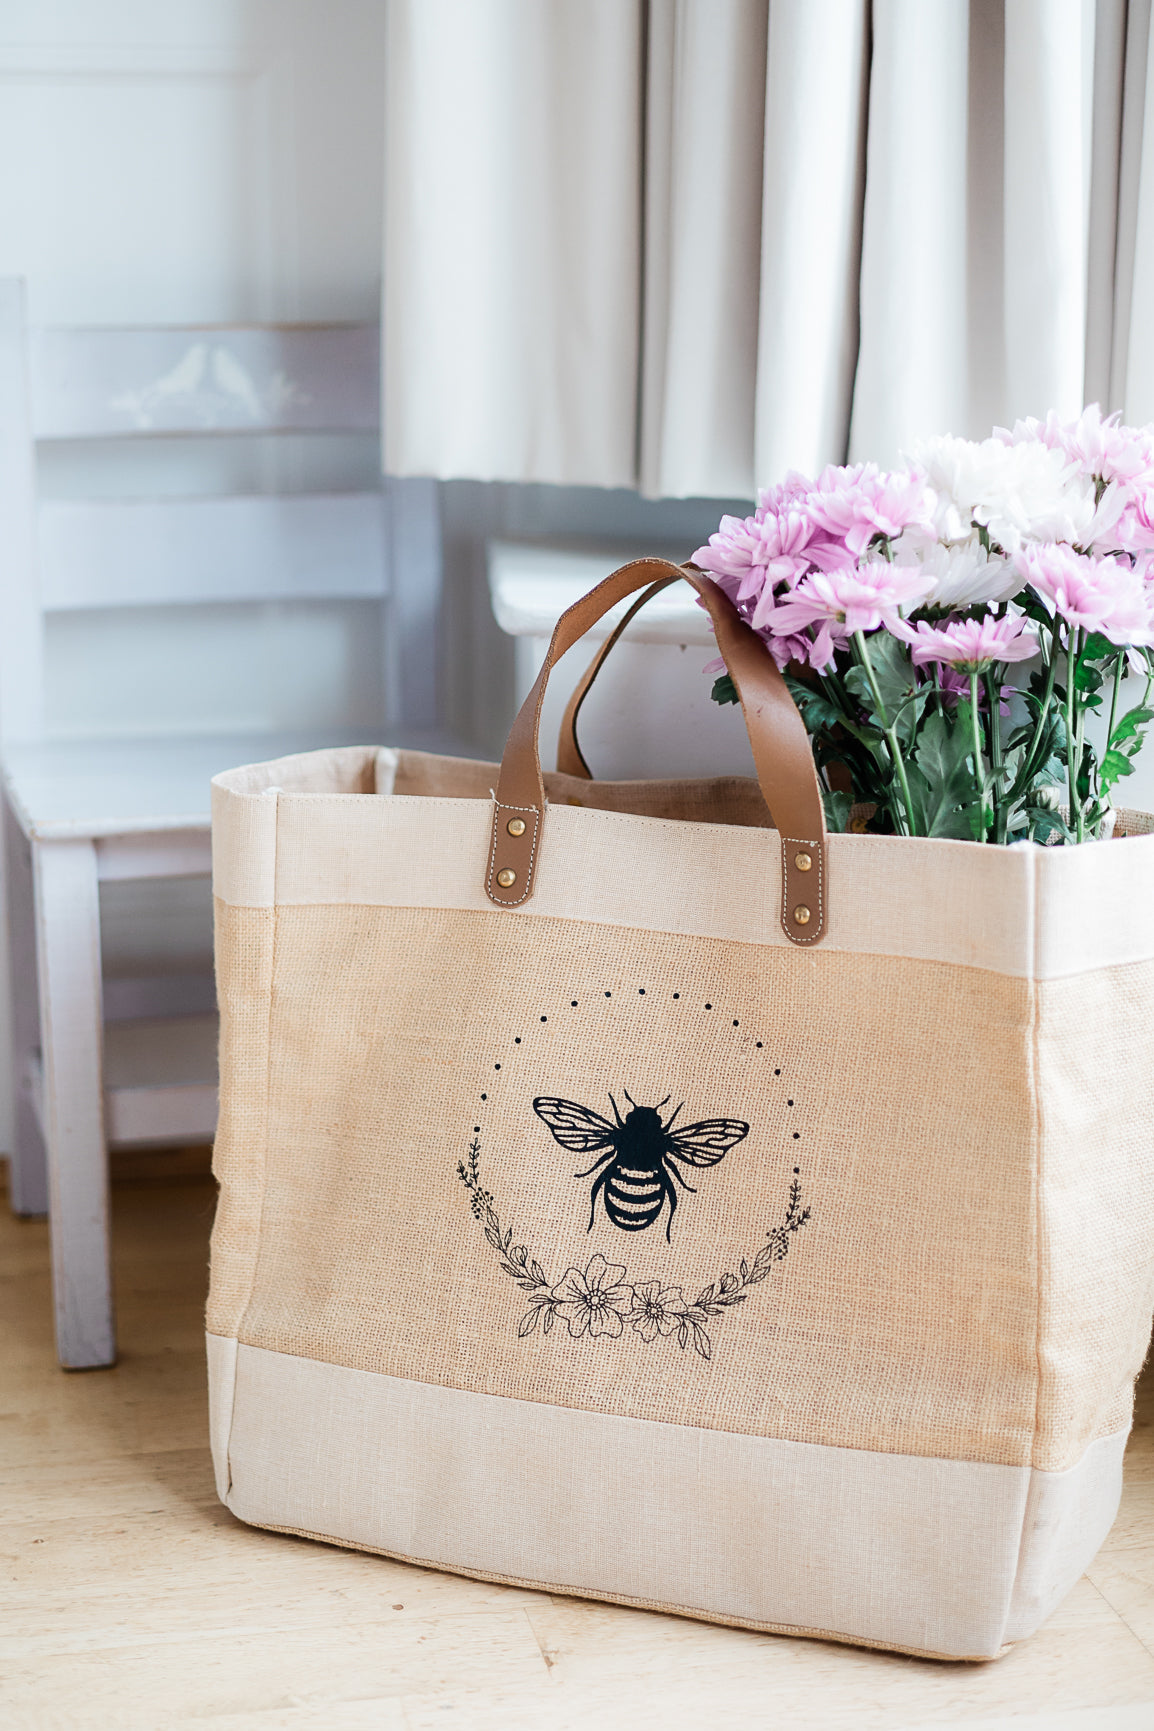 Bee design Large Jute Bag Leather Handle Shopper Beach Bag